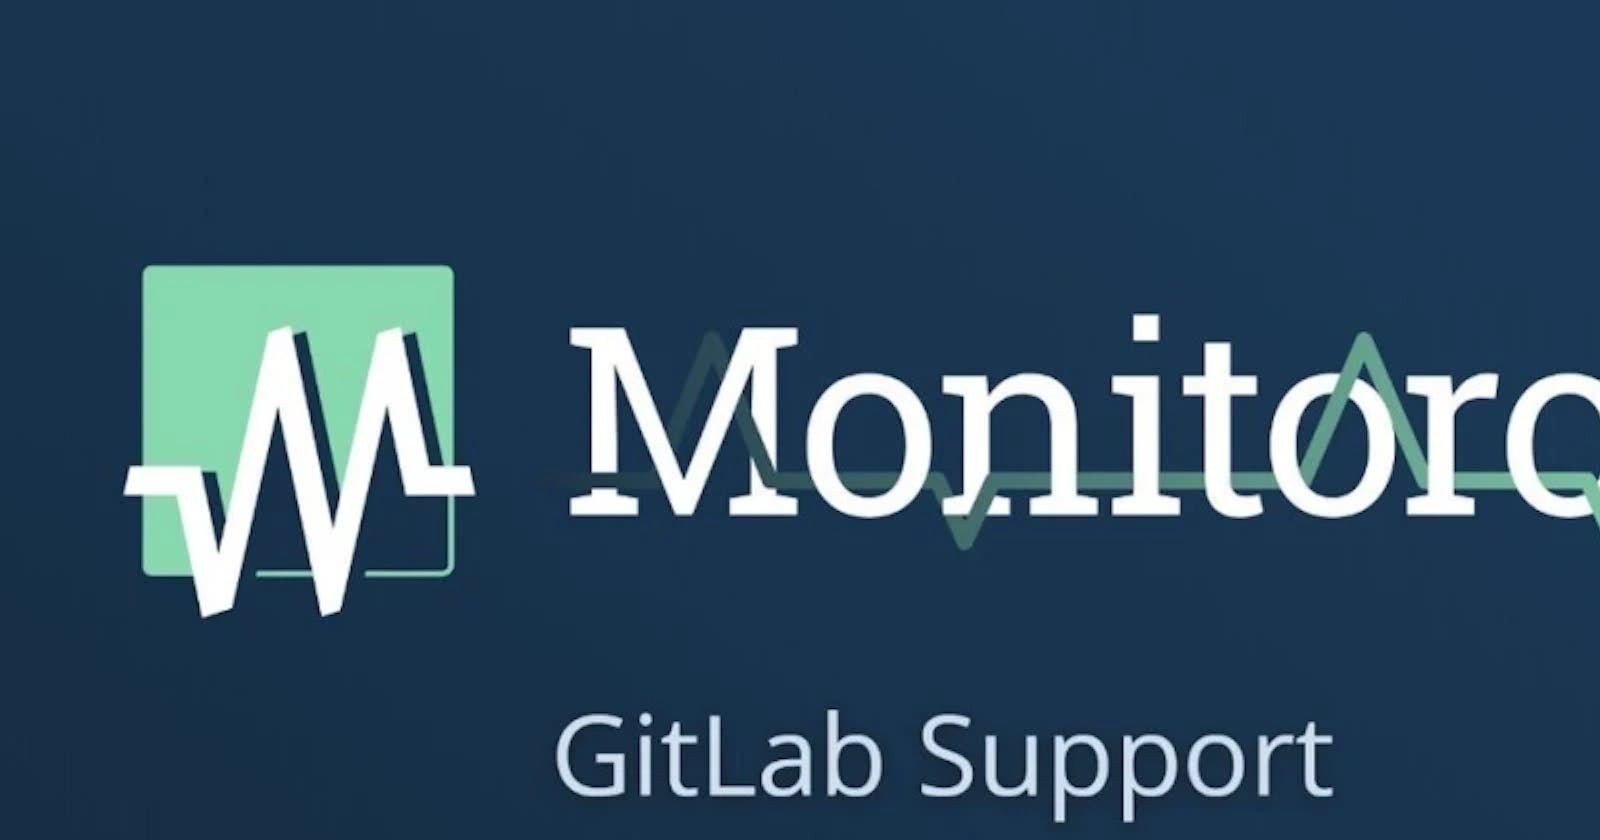 Monitoror - Gitlab